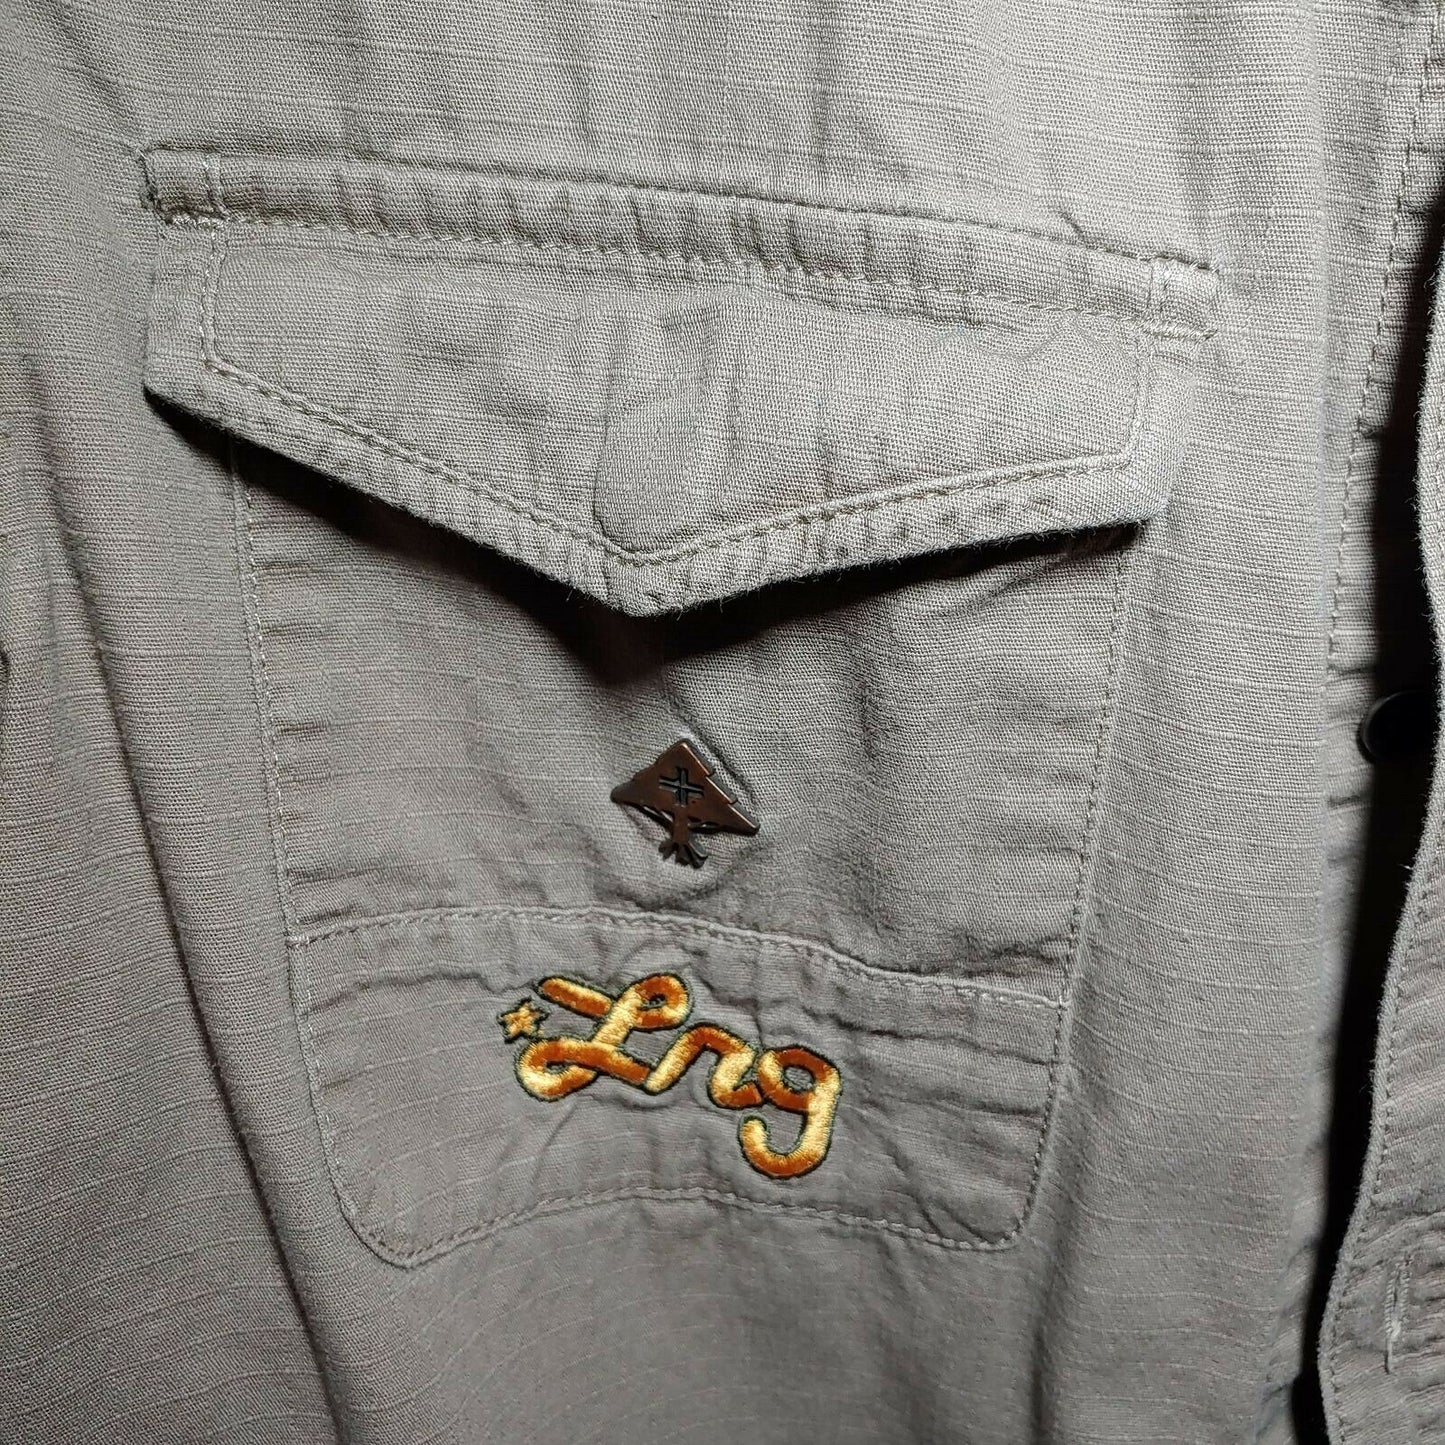 LR Geans Brown Men's Large Button-Down Long sleeve Shirt